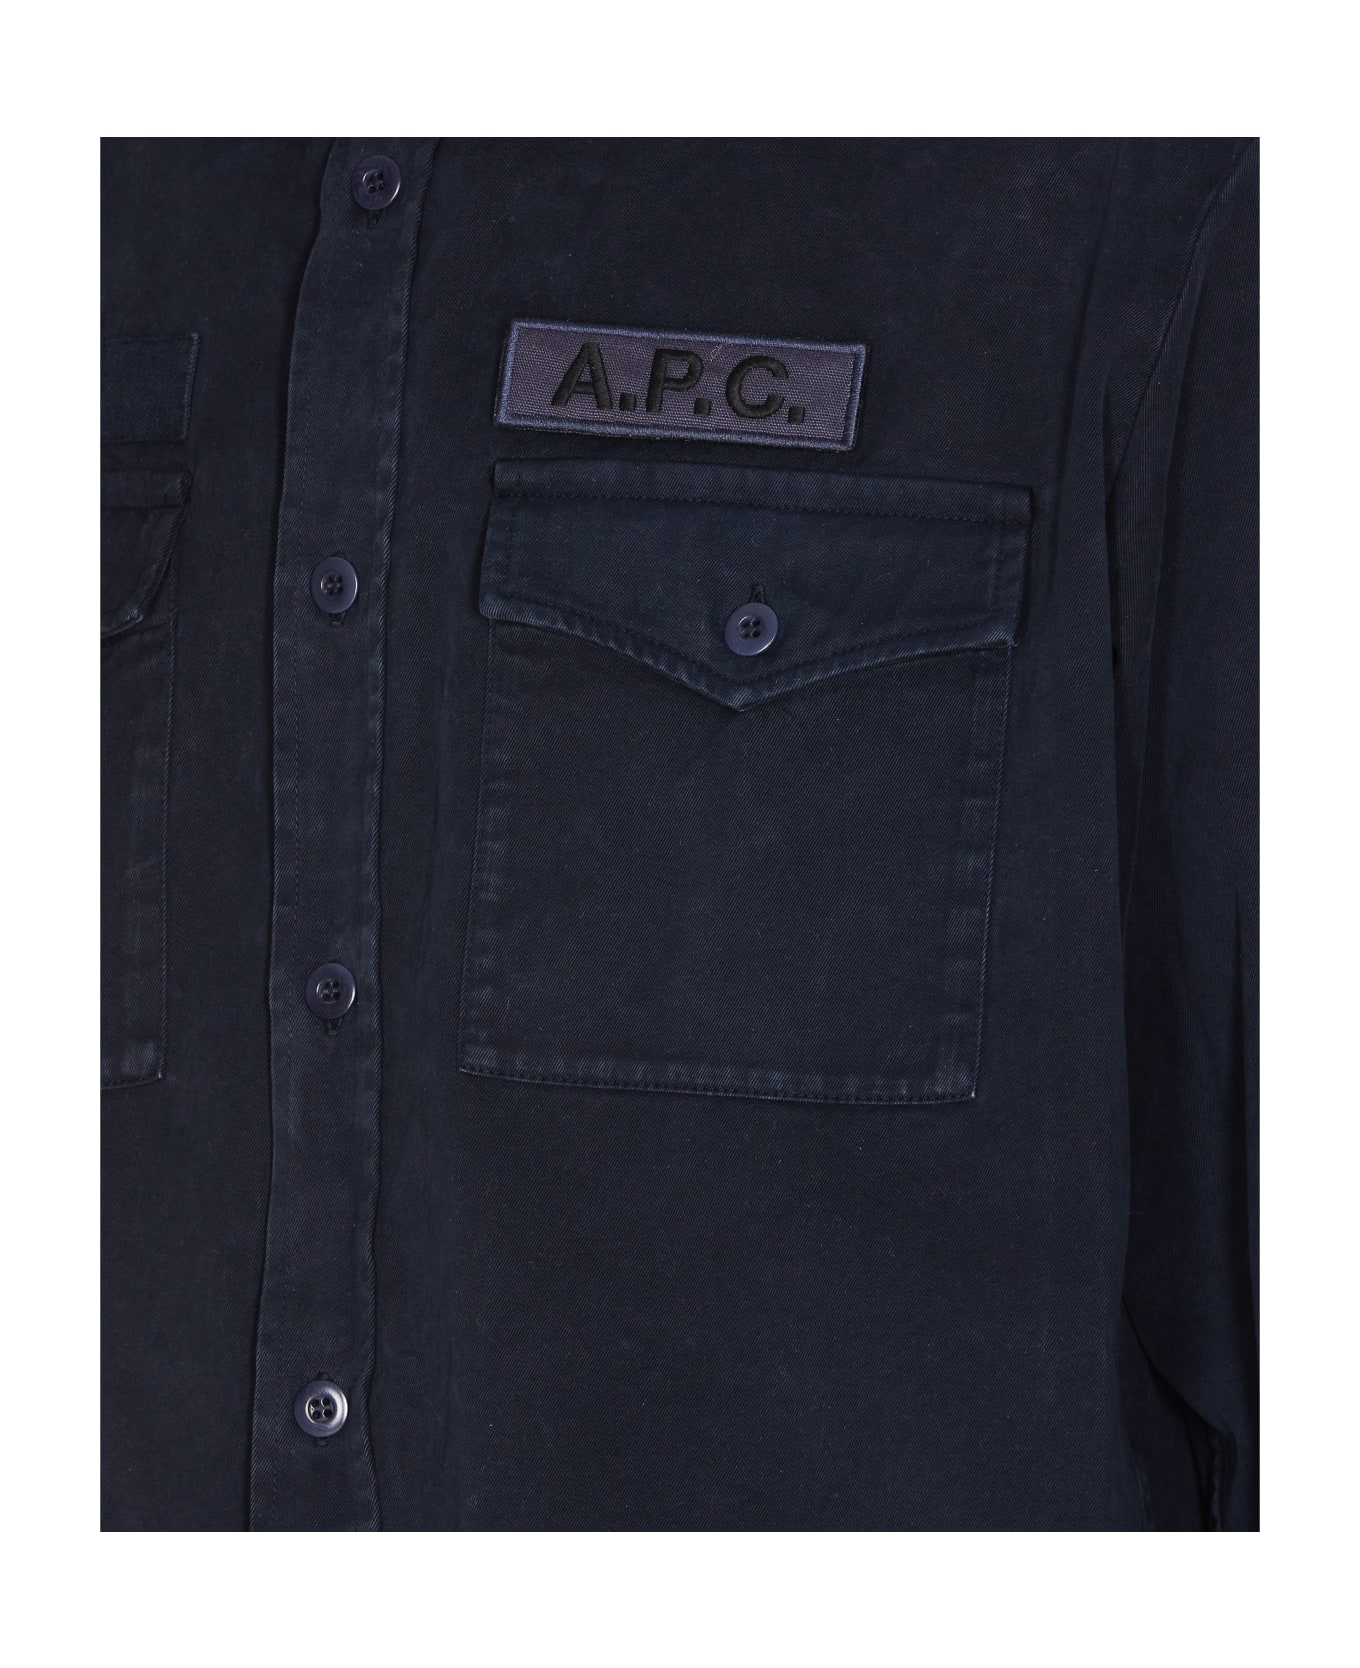 A.P.C. Shirt - Blue ジャケット